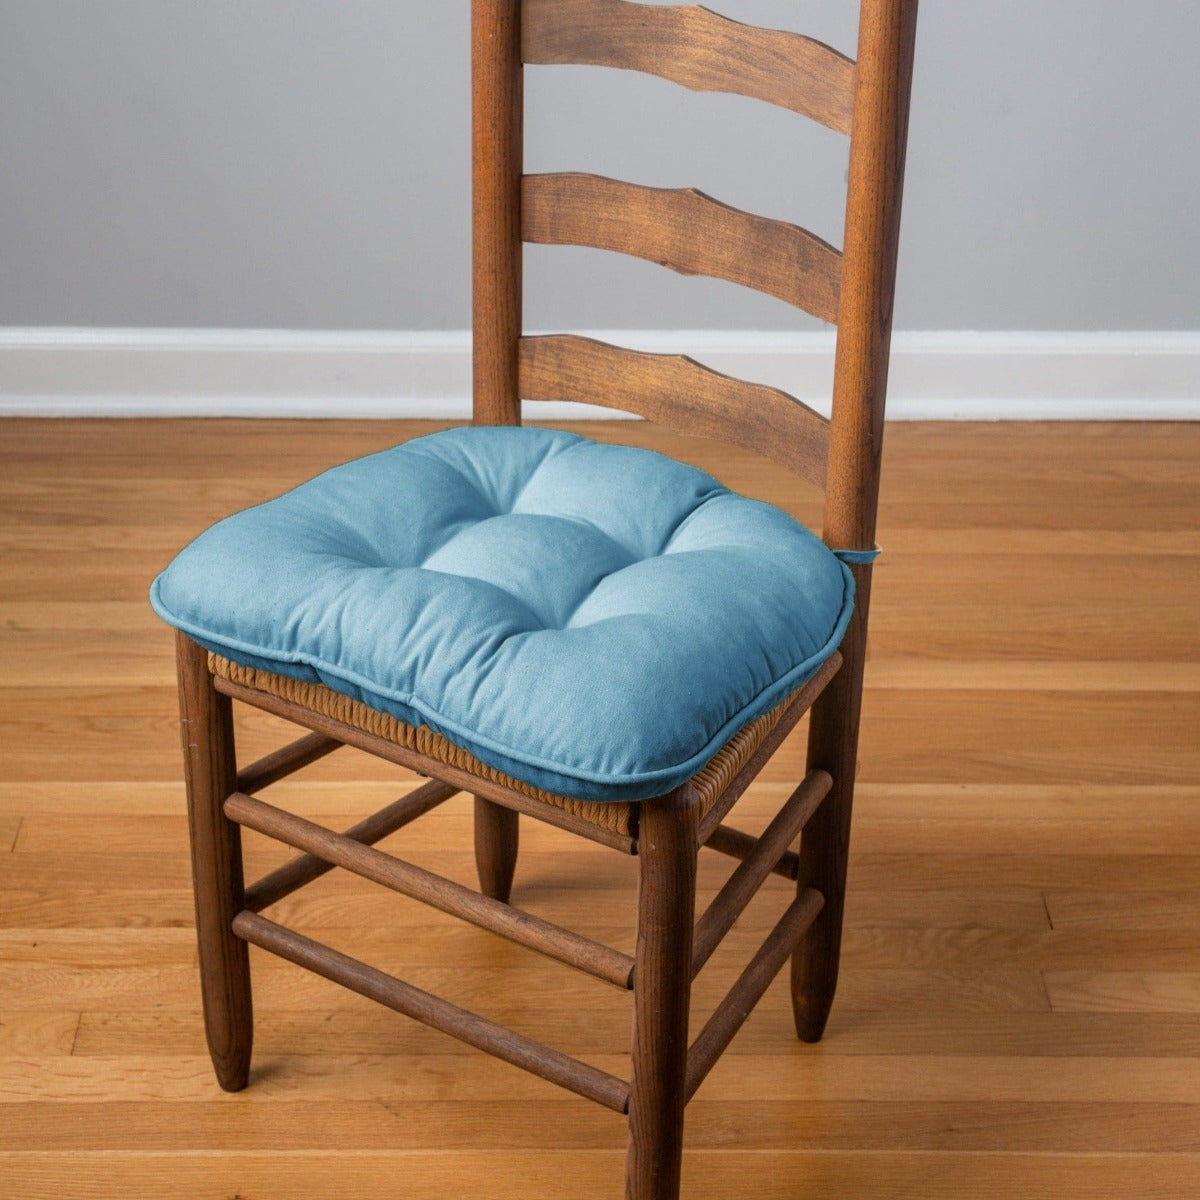 How To: Wash Barnett Home Decor Chair Cushions